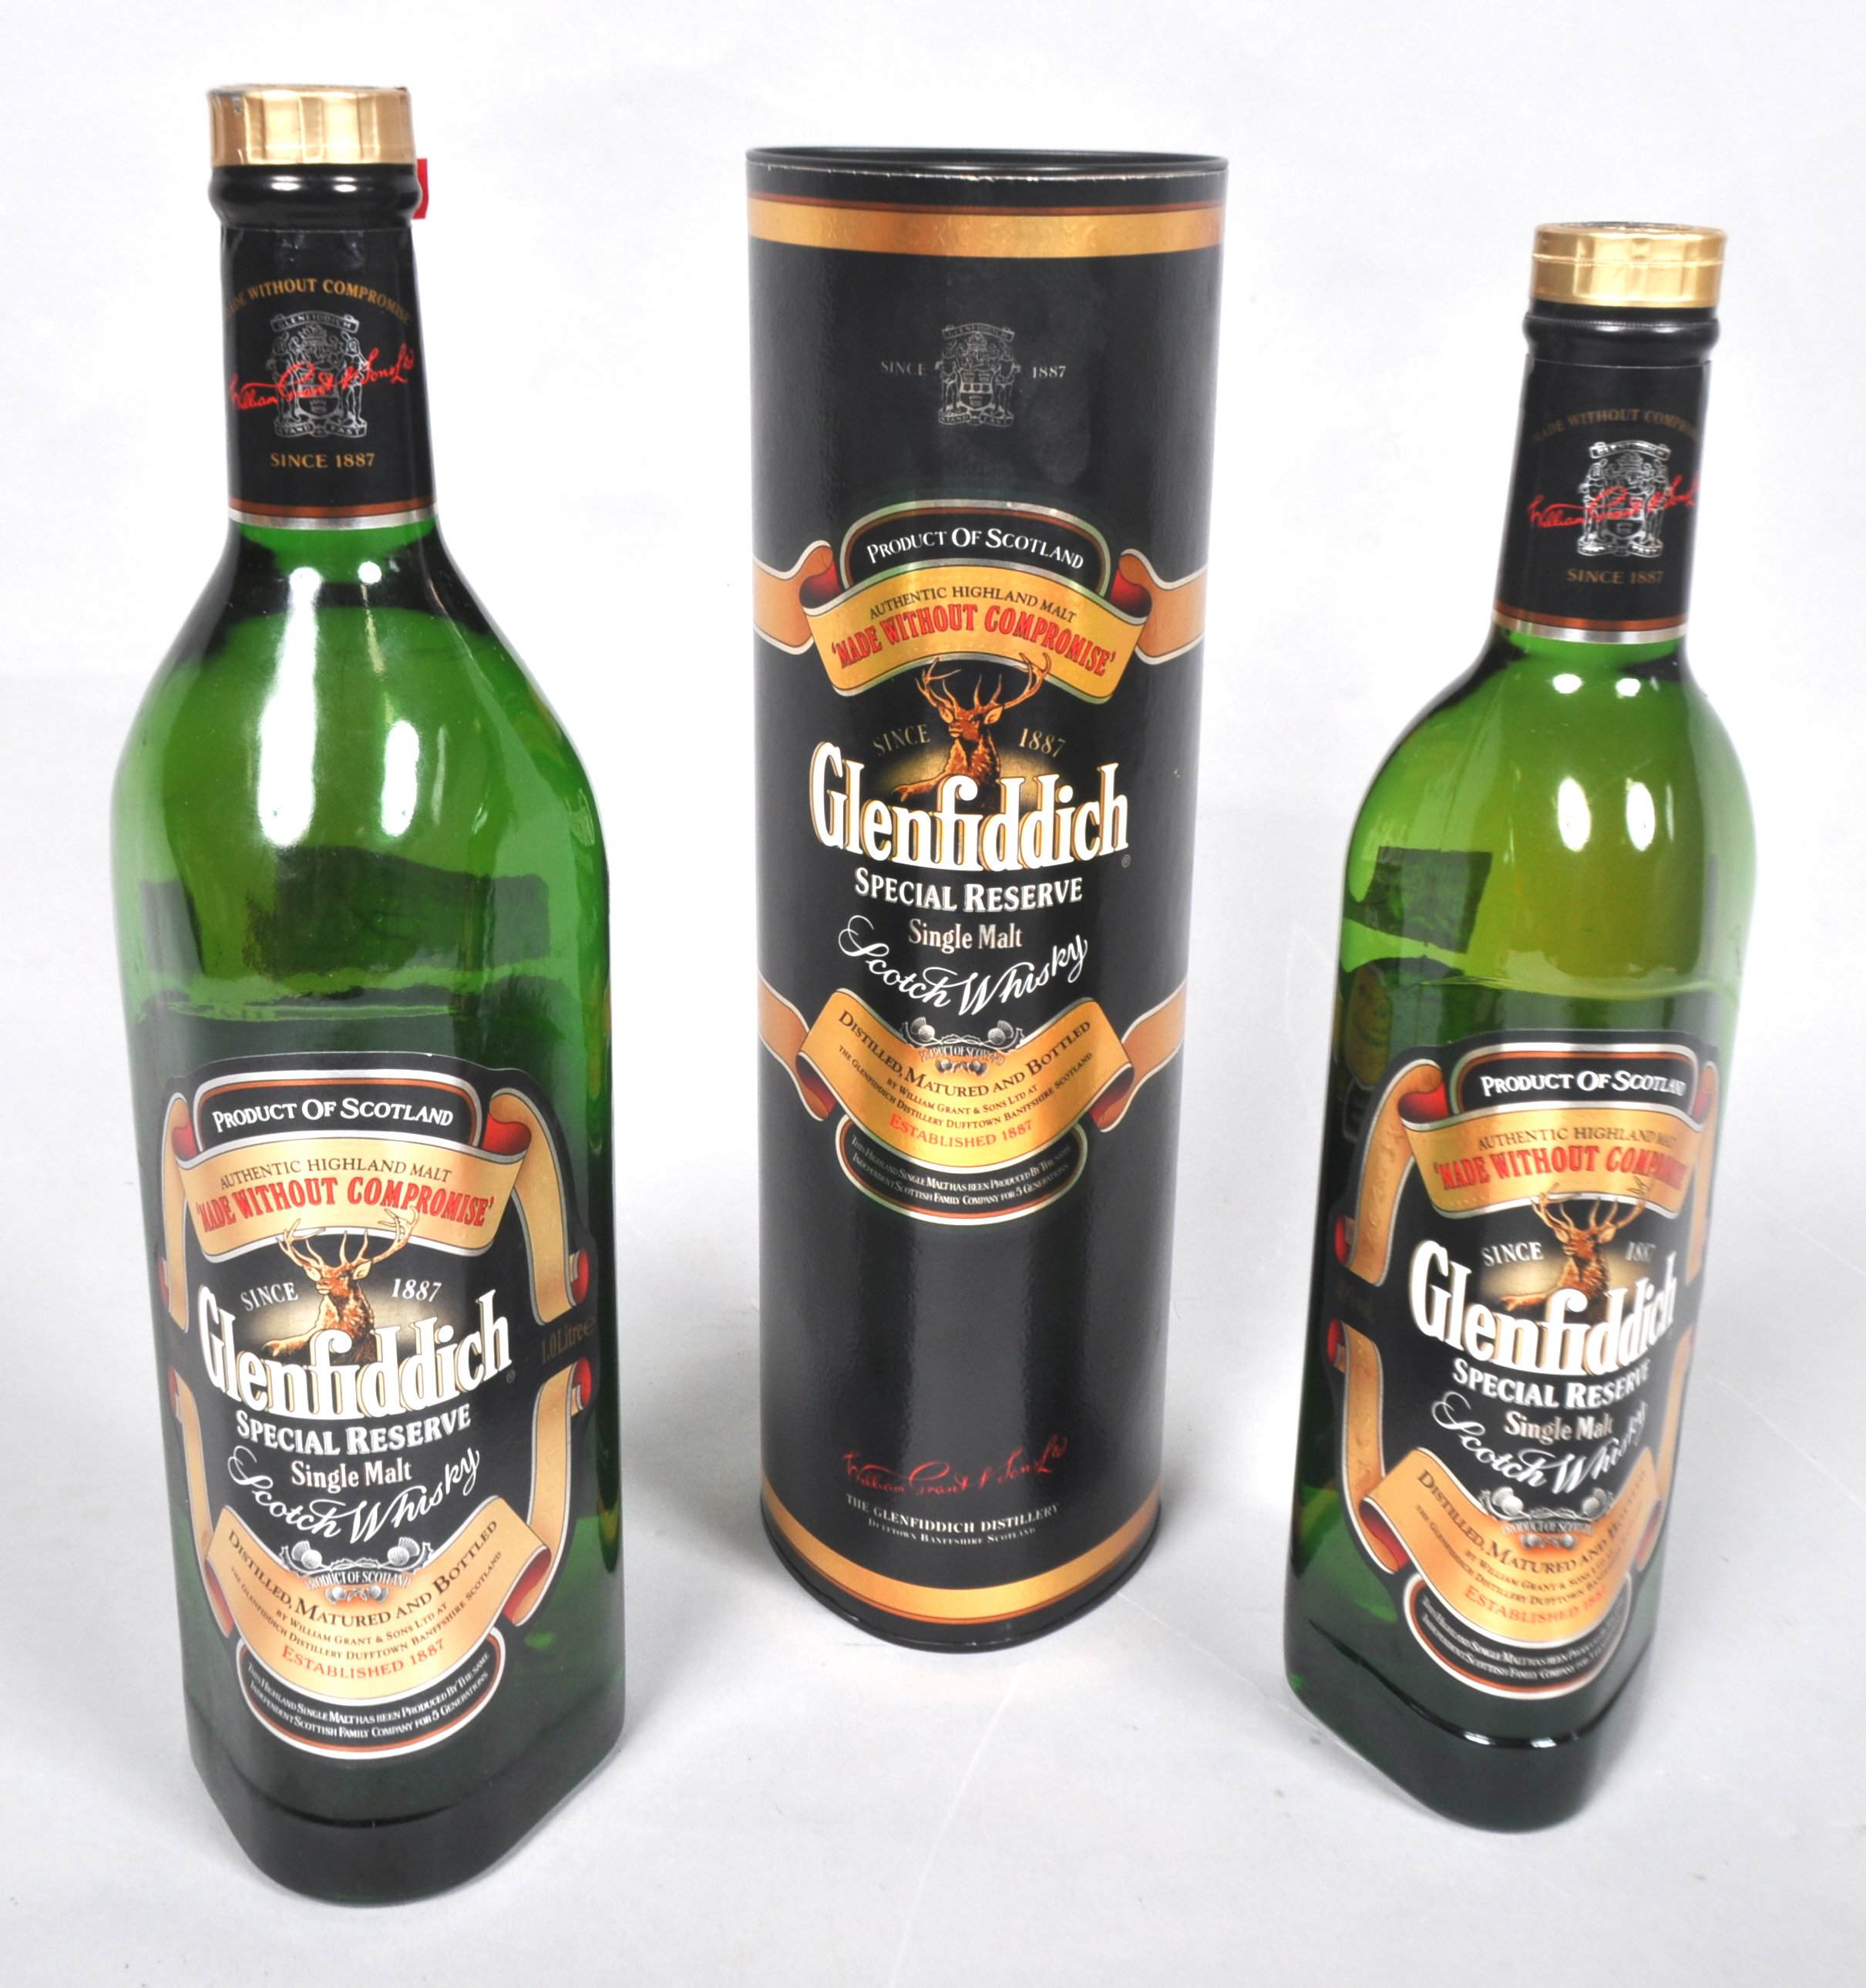 A bottle of gGenfiddich special reserve malt whisky,